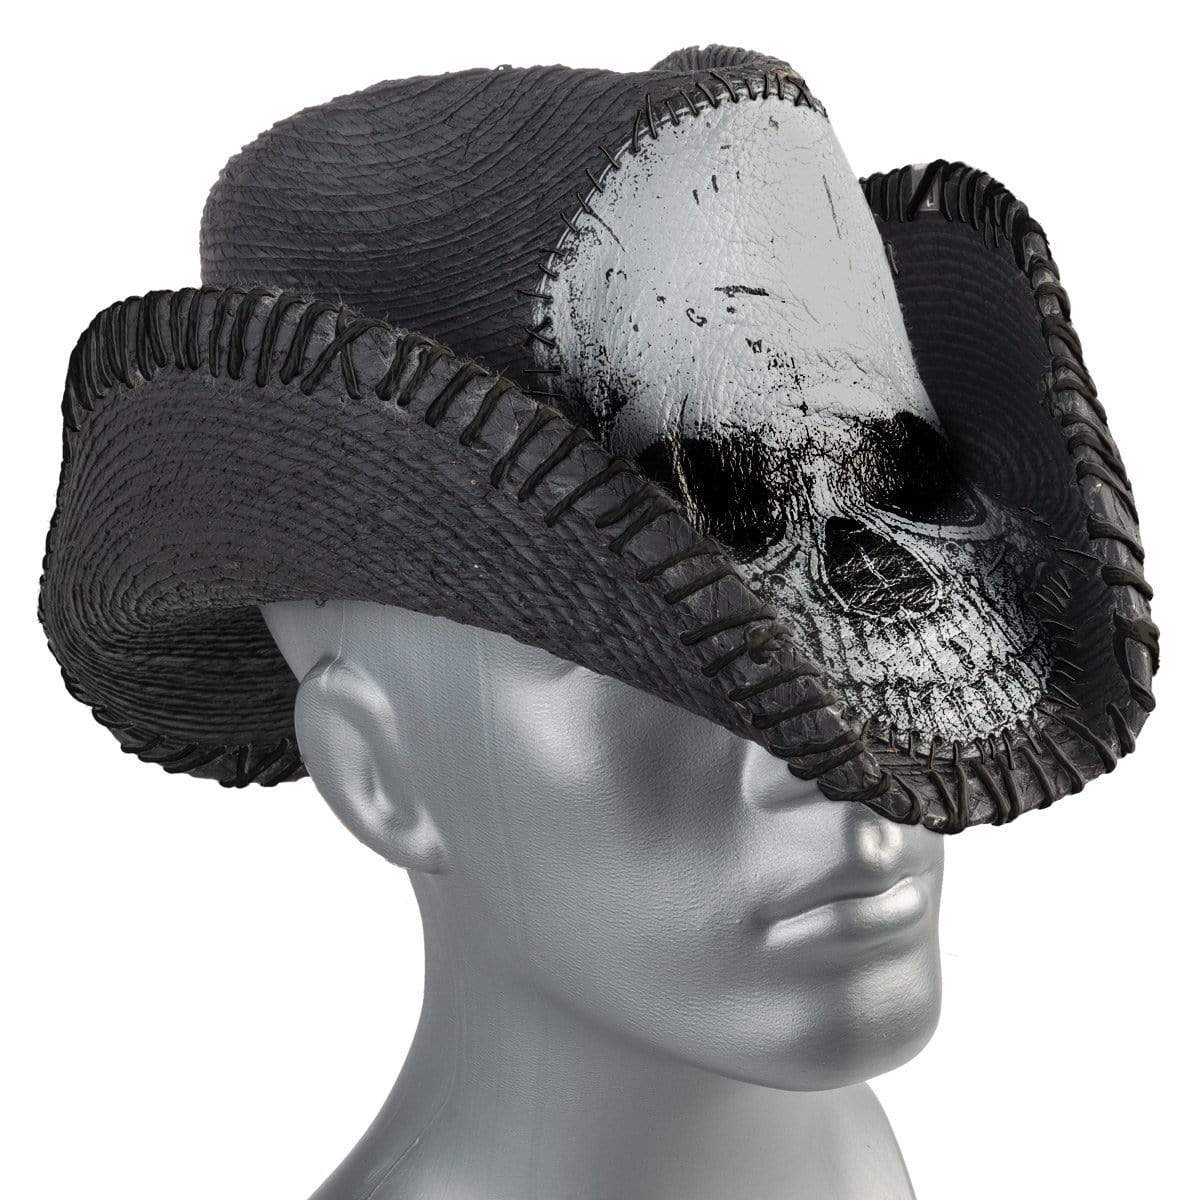 Custom Chop Shop Accessory Wornstar Custom Rocker Hat - Black Stitched Skull